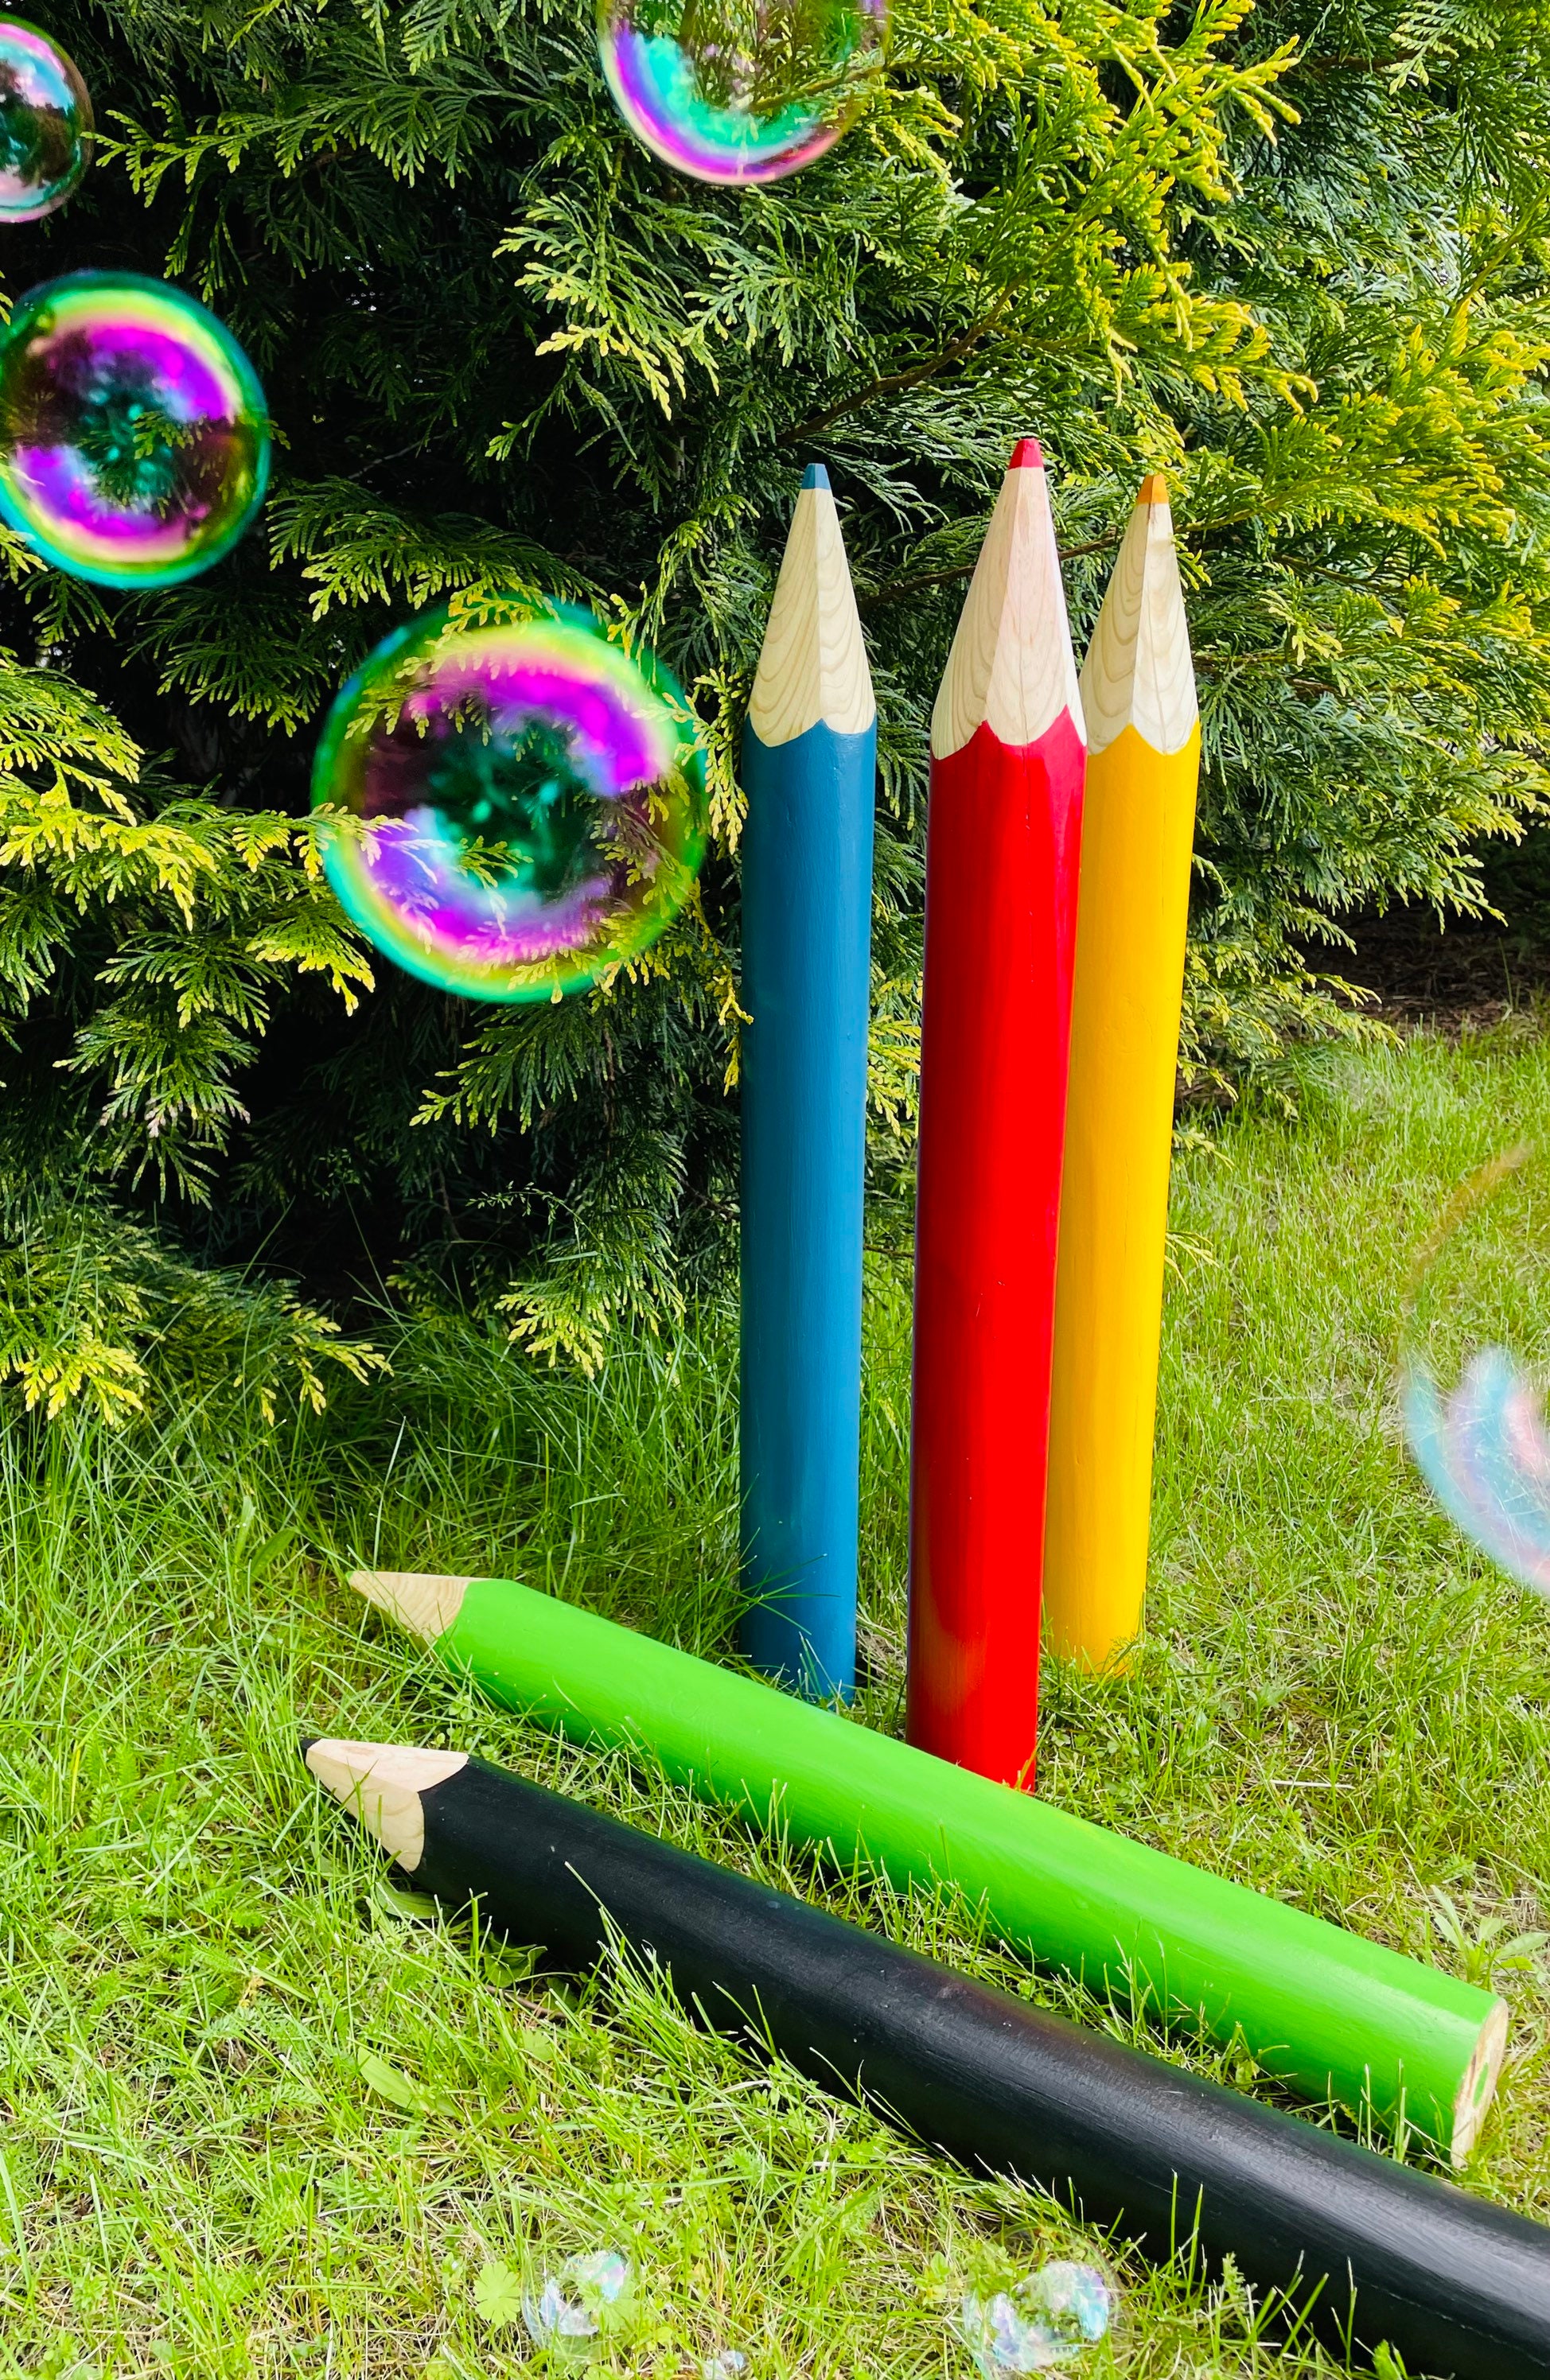 Extra Large Rainbow Stacking Crayons 